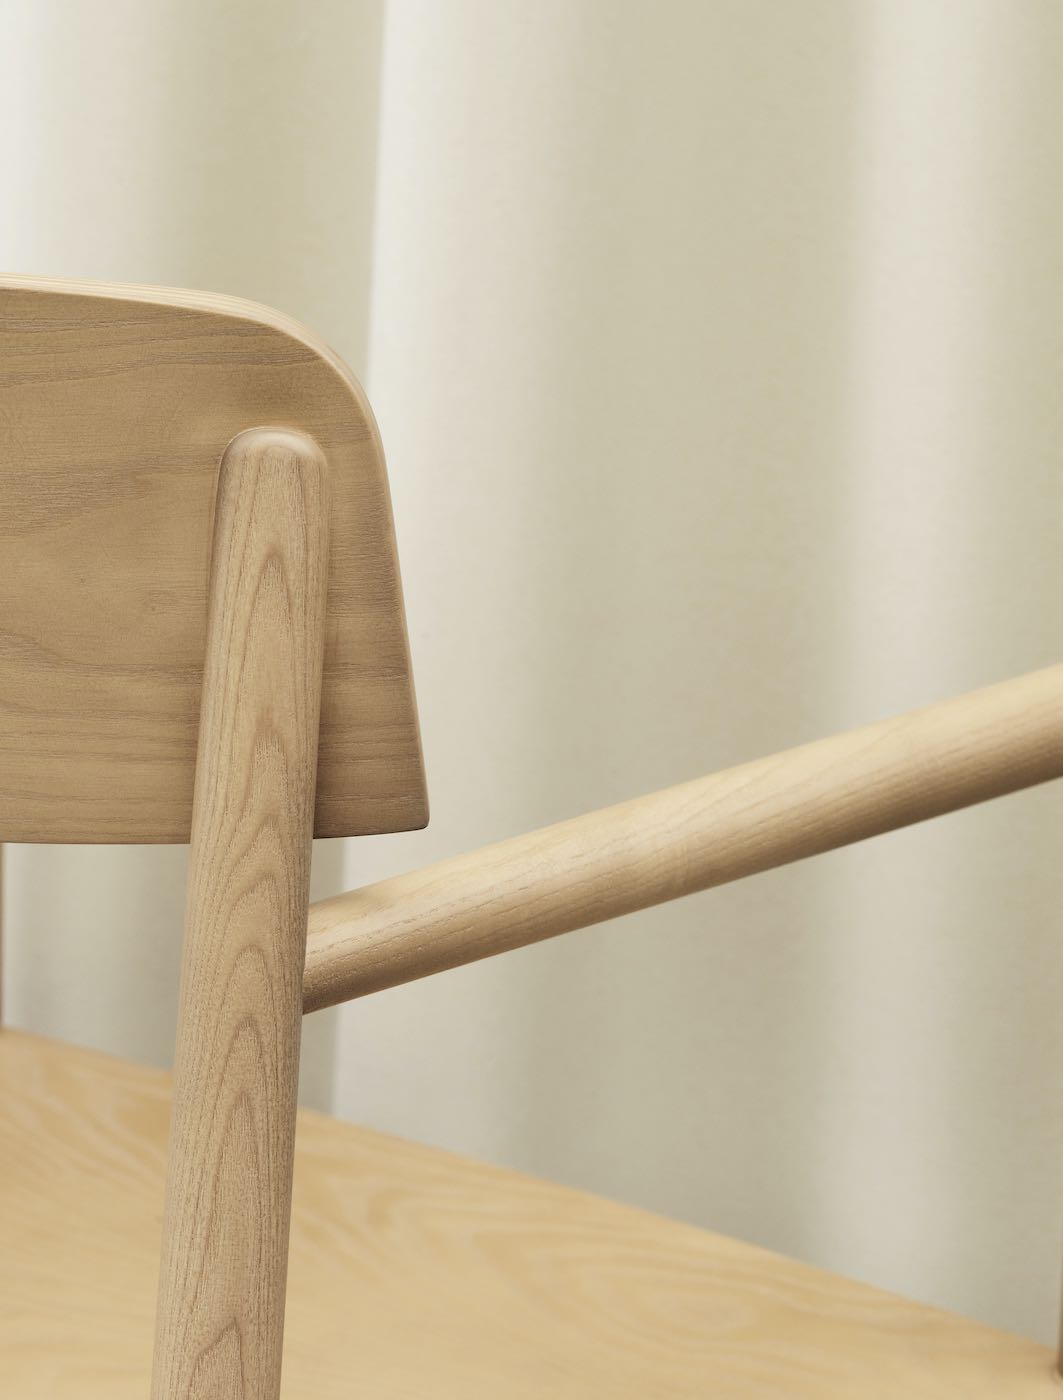 Skandinavische Stühle, Stuhl skandinavisch, Skandinavisches Design, Holzstuhl, 3daysofdesign